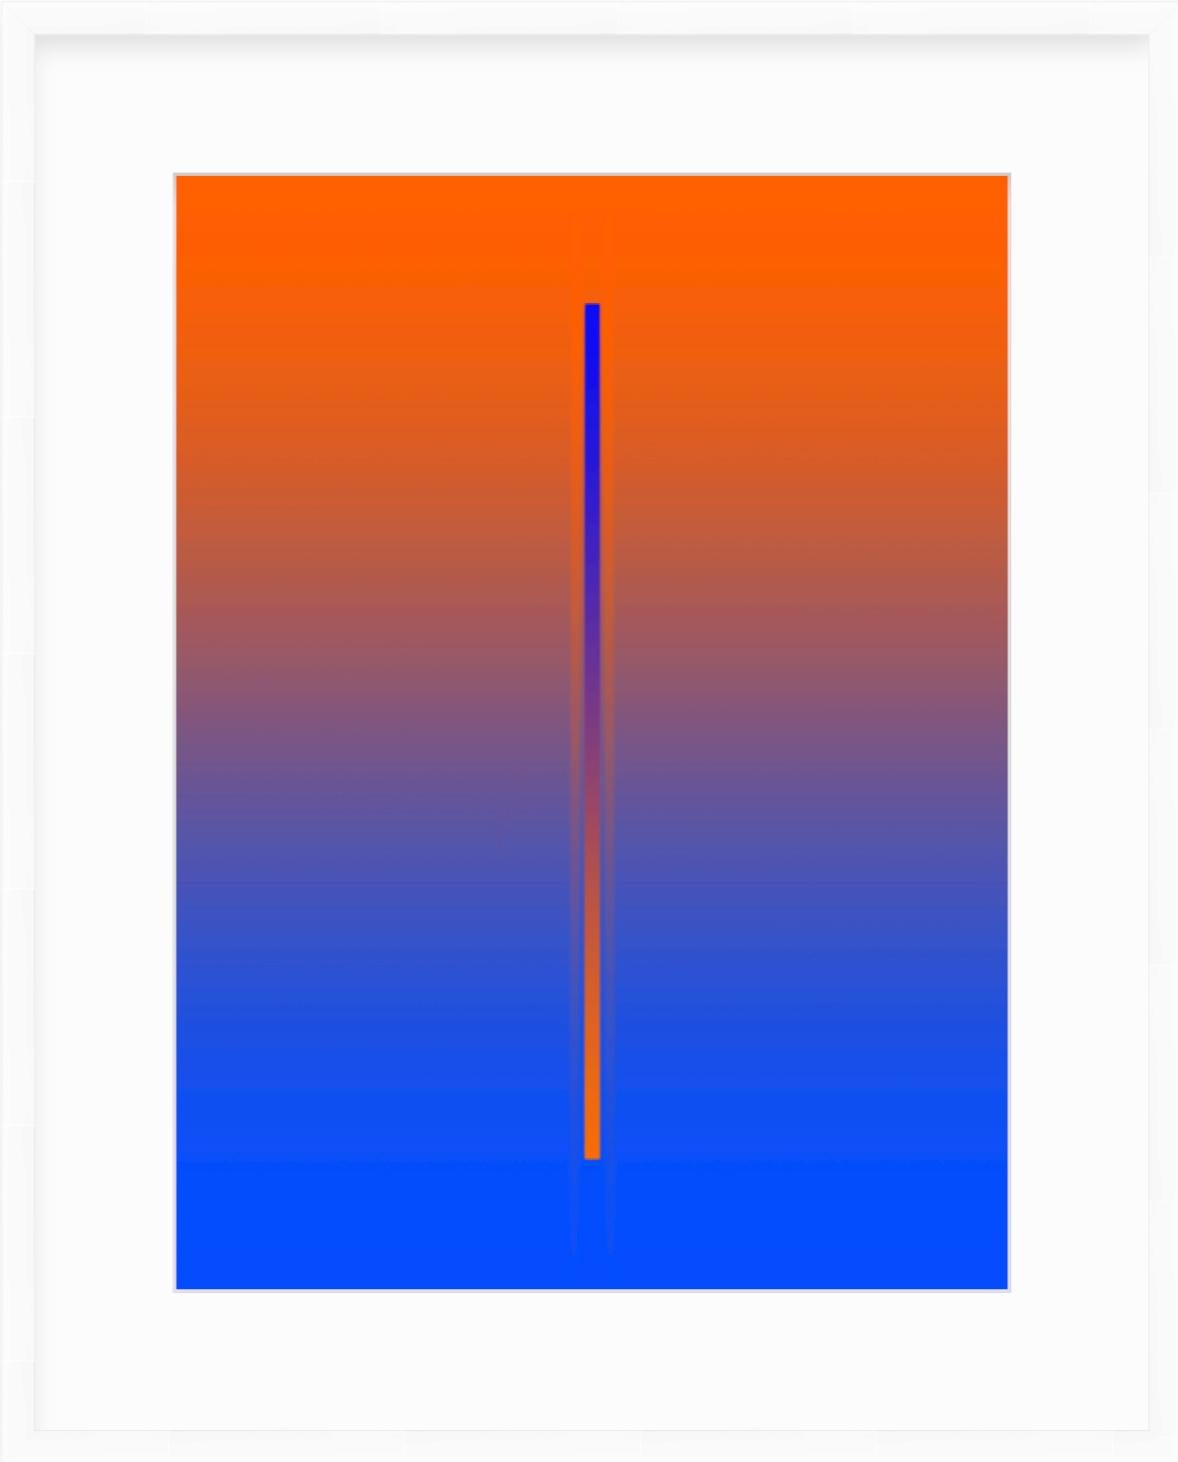 Pletneva Abstract Painting - "Lunar Year" - minimalistic digital print, orange and blue, white mat